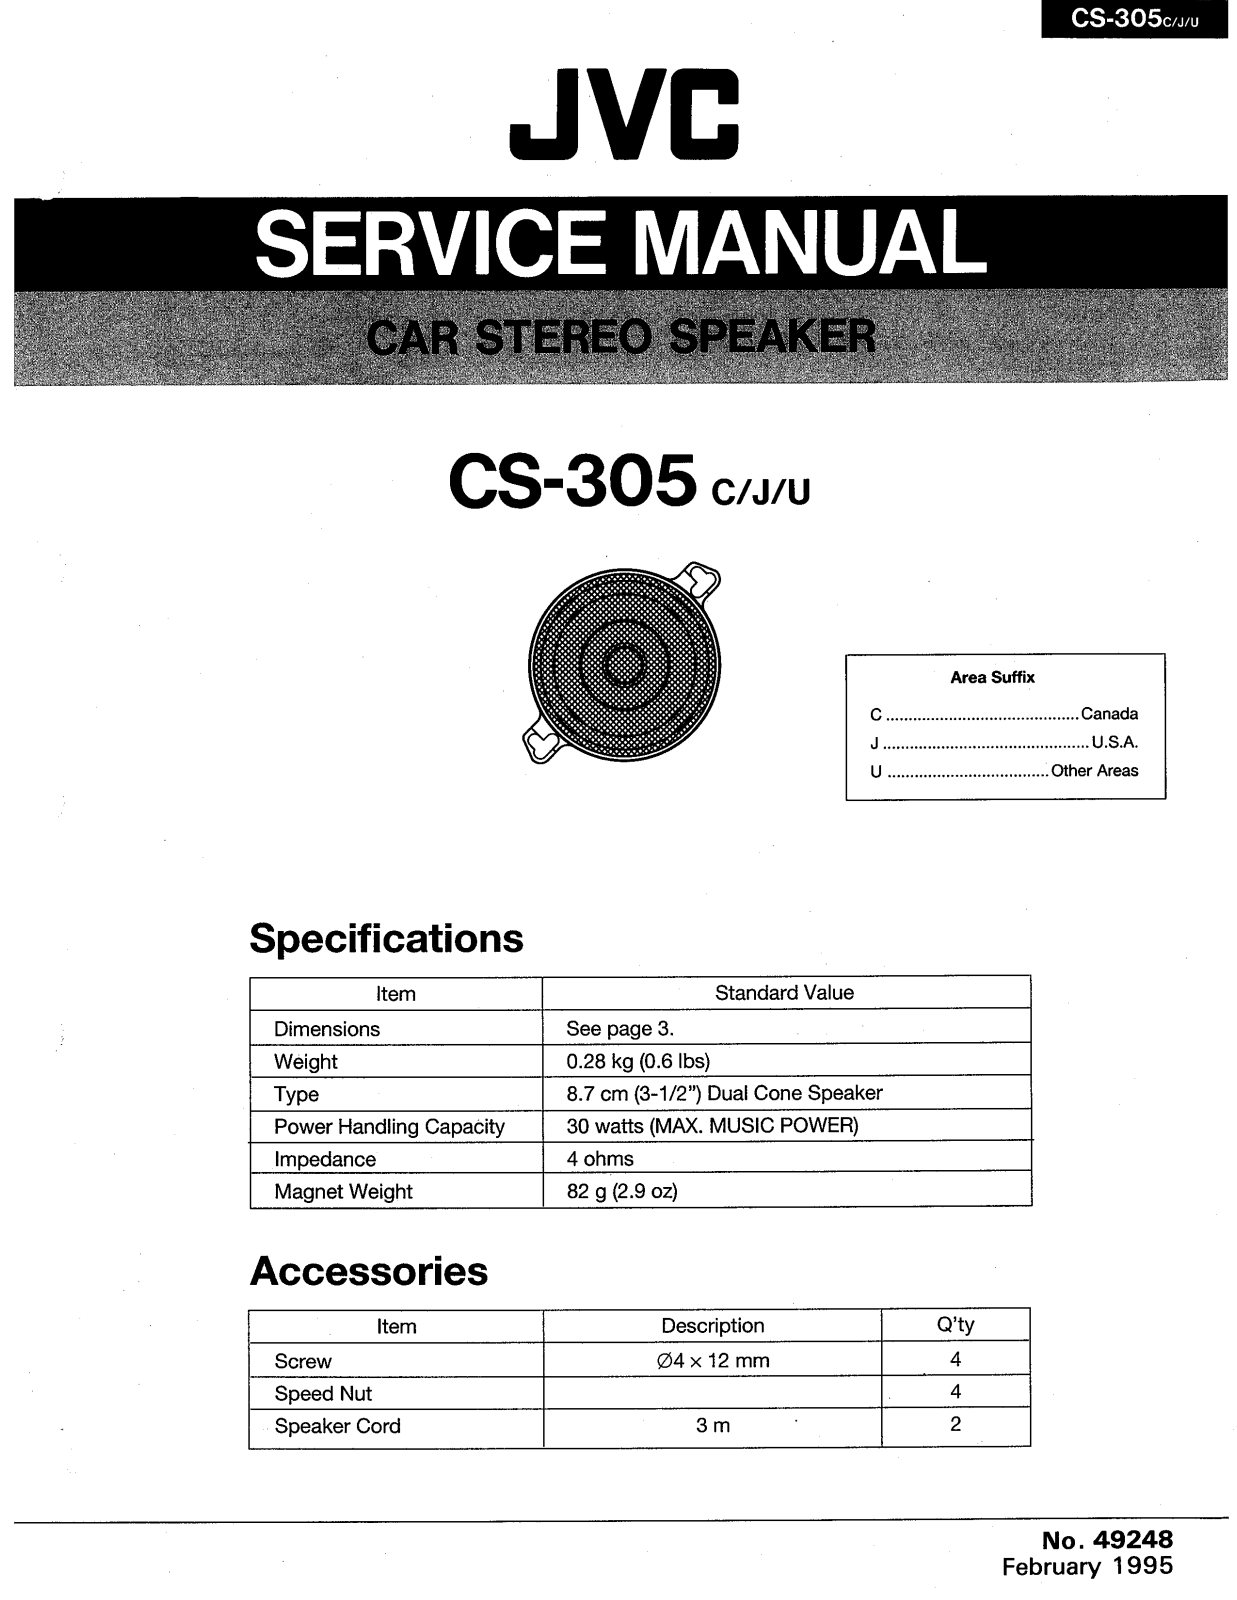 JVC CS-305C, CS-305J, CS-305U Service Manual